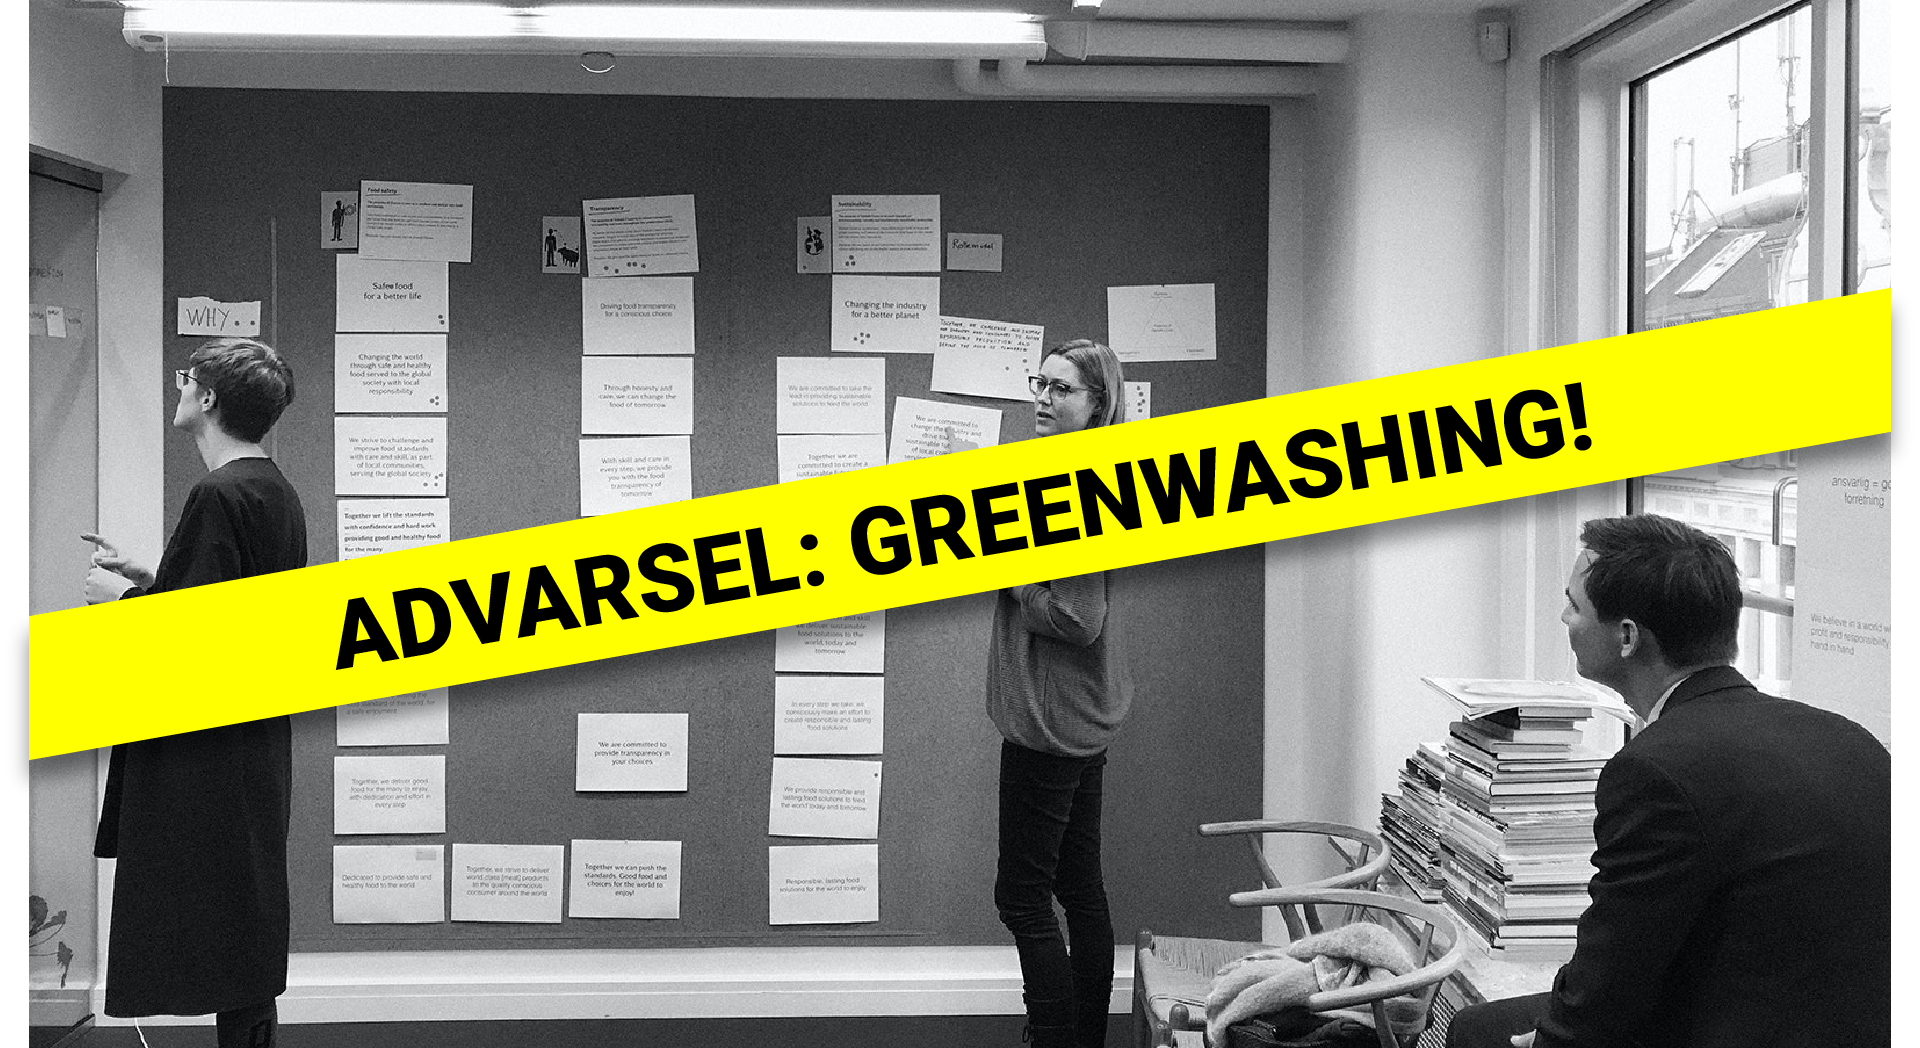 Danish Crowns kampagne er omfattende Greenwashing